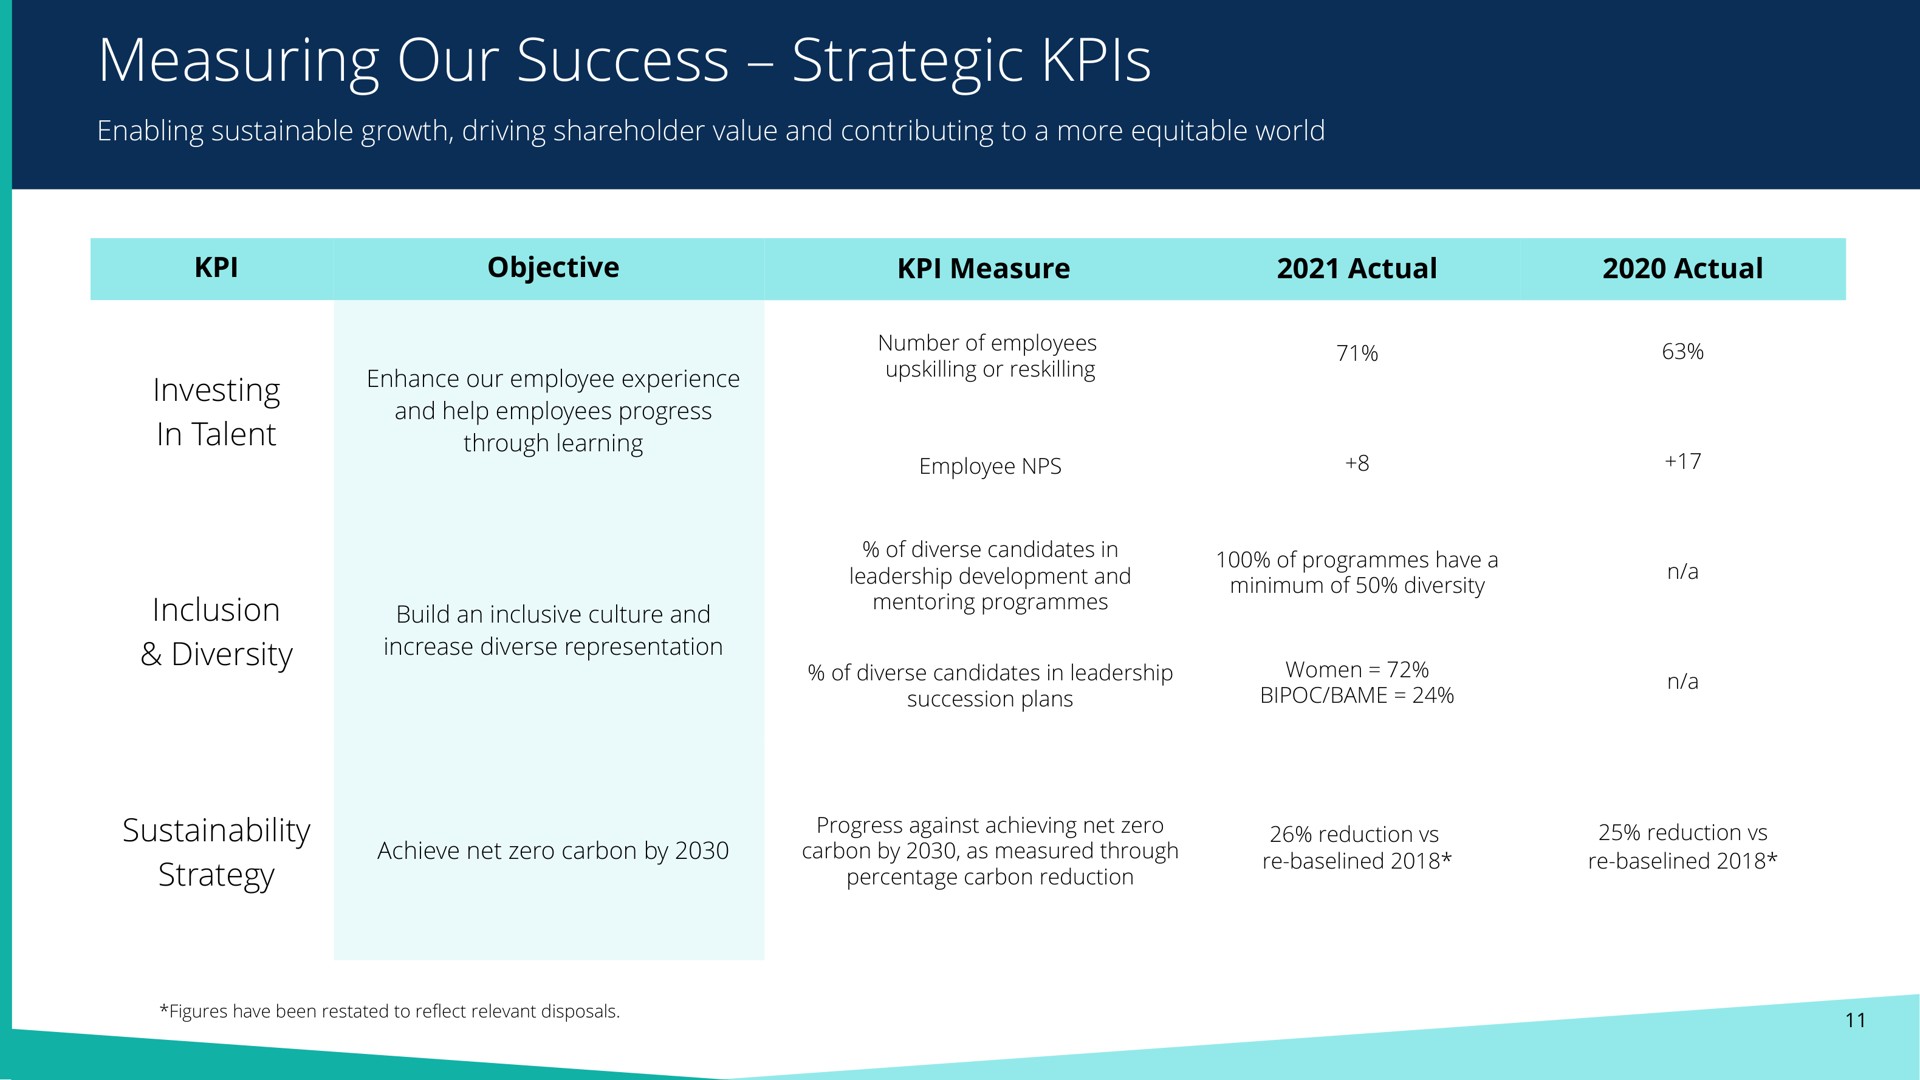 measuring our success strategic | Pearson